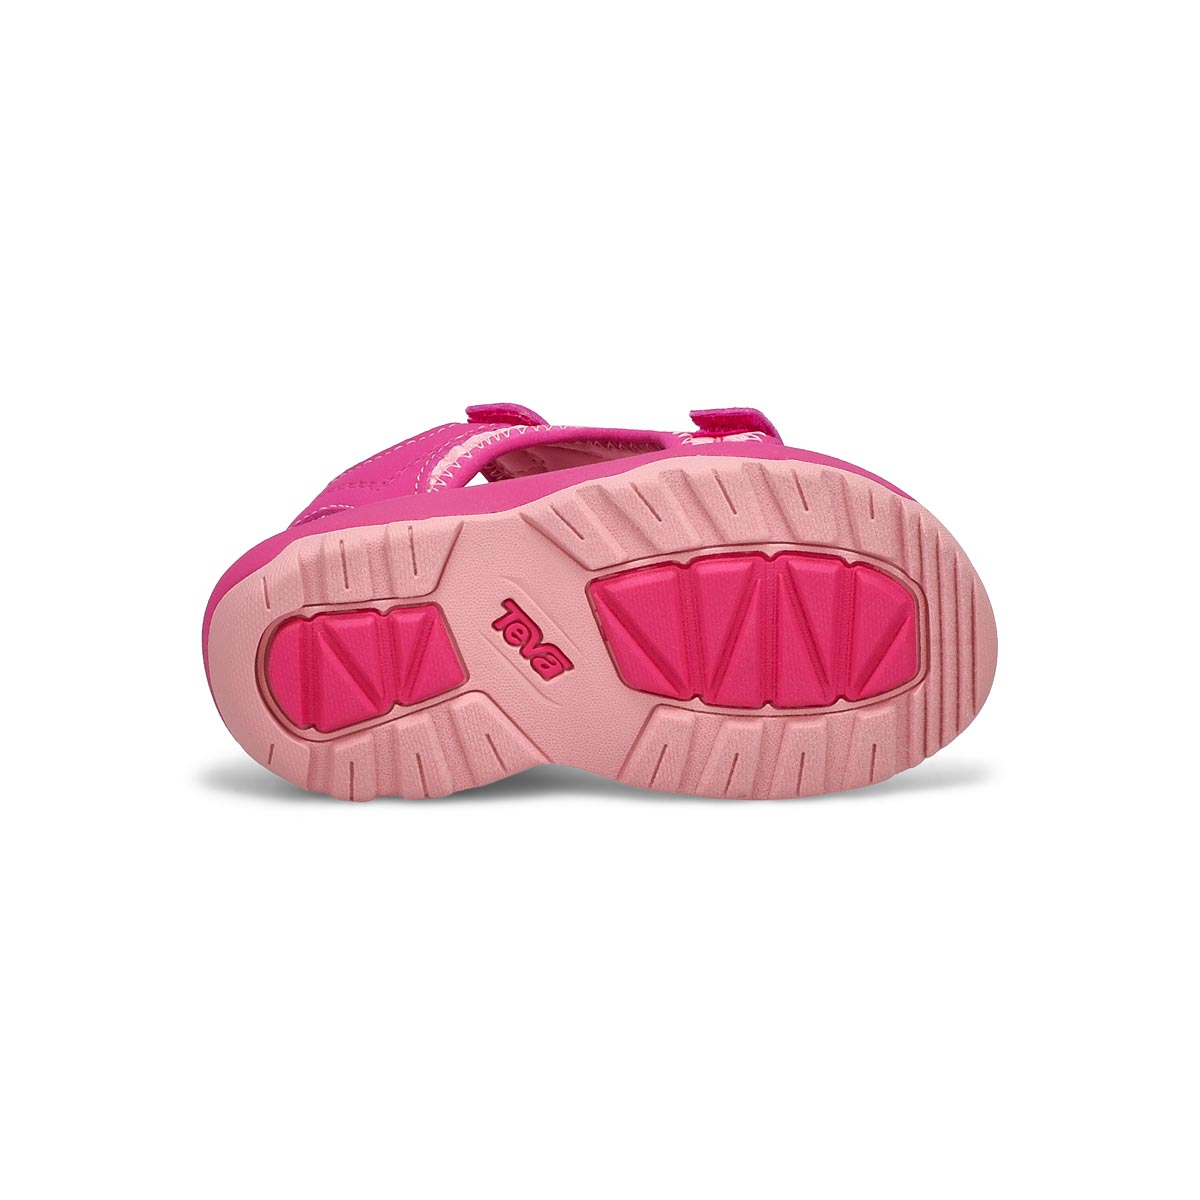 Infants' Psyclone XLT Sport Sandal - Pink